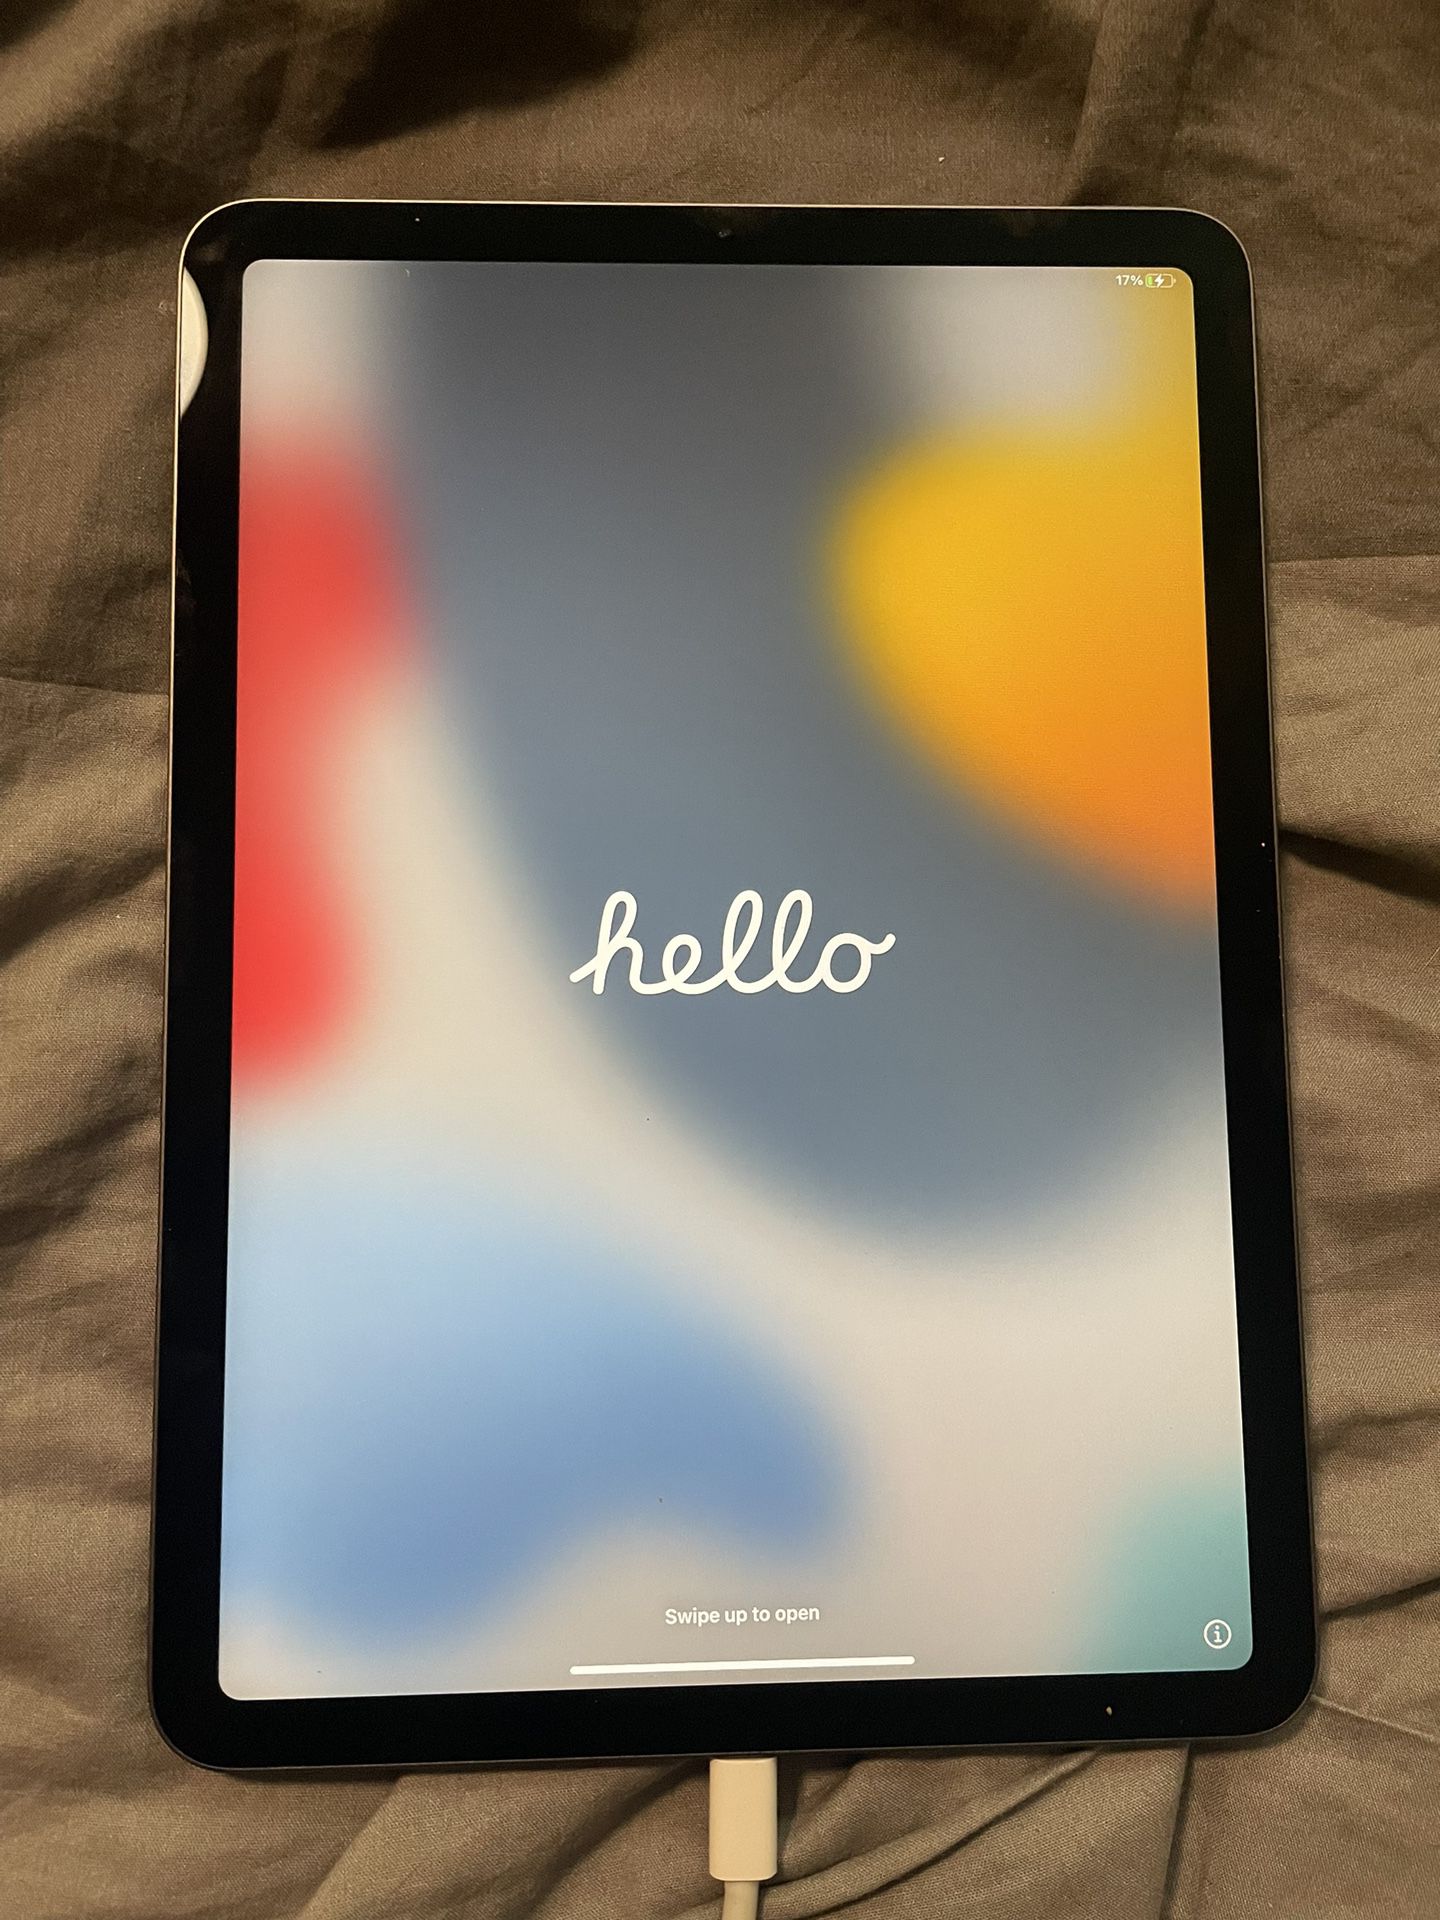 iPad Air 4th Generation 